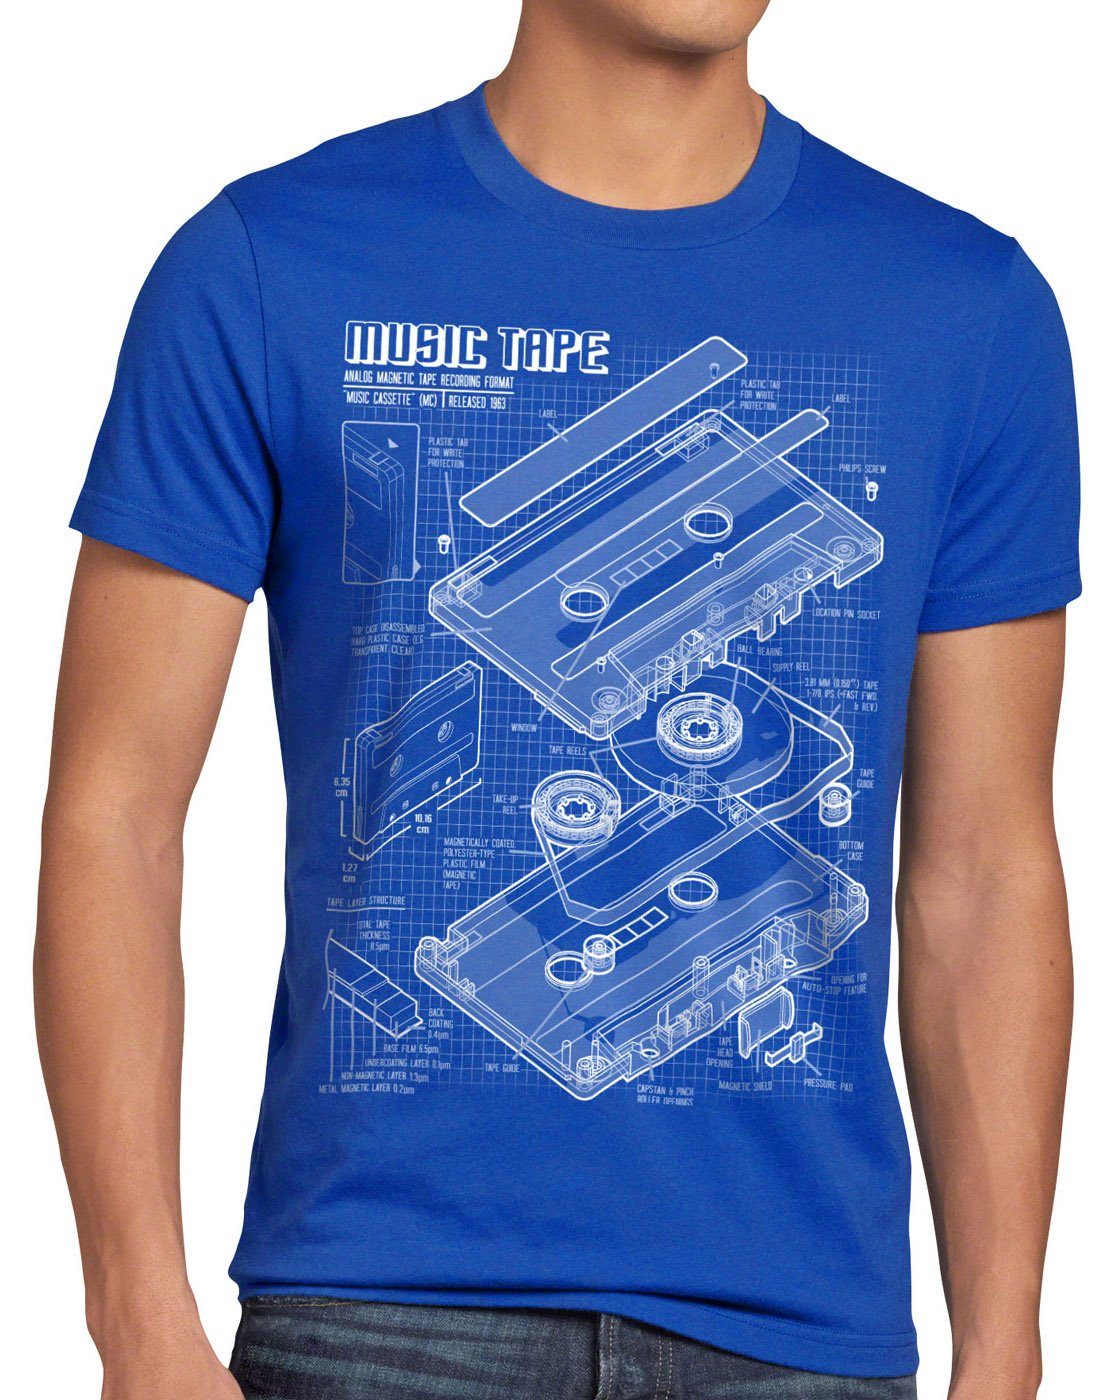 style3 Print-Shirt Herren T-Shirt TAPE Kassette disko MC DJ retro musik turntable ndw analog disco blau